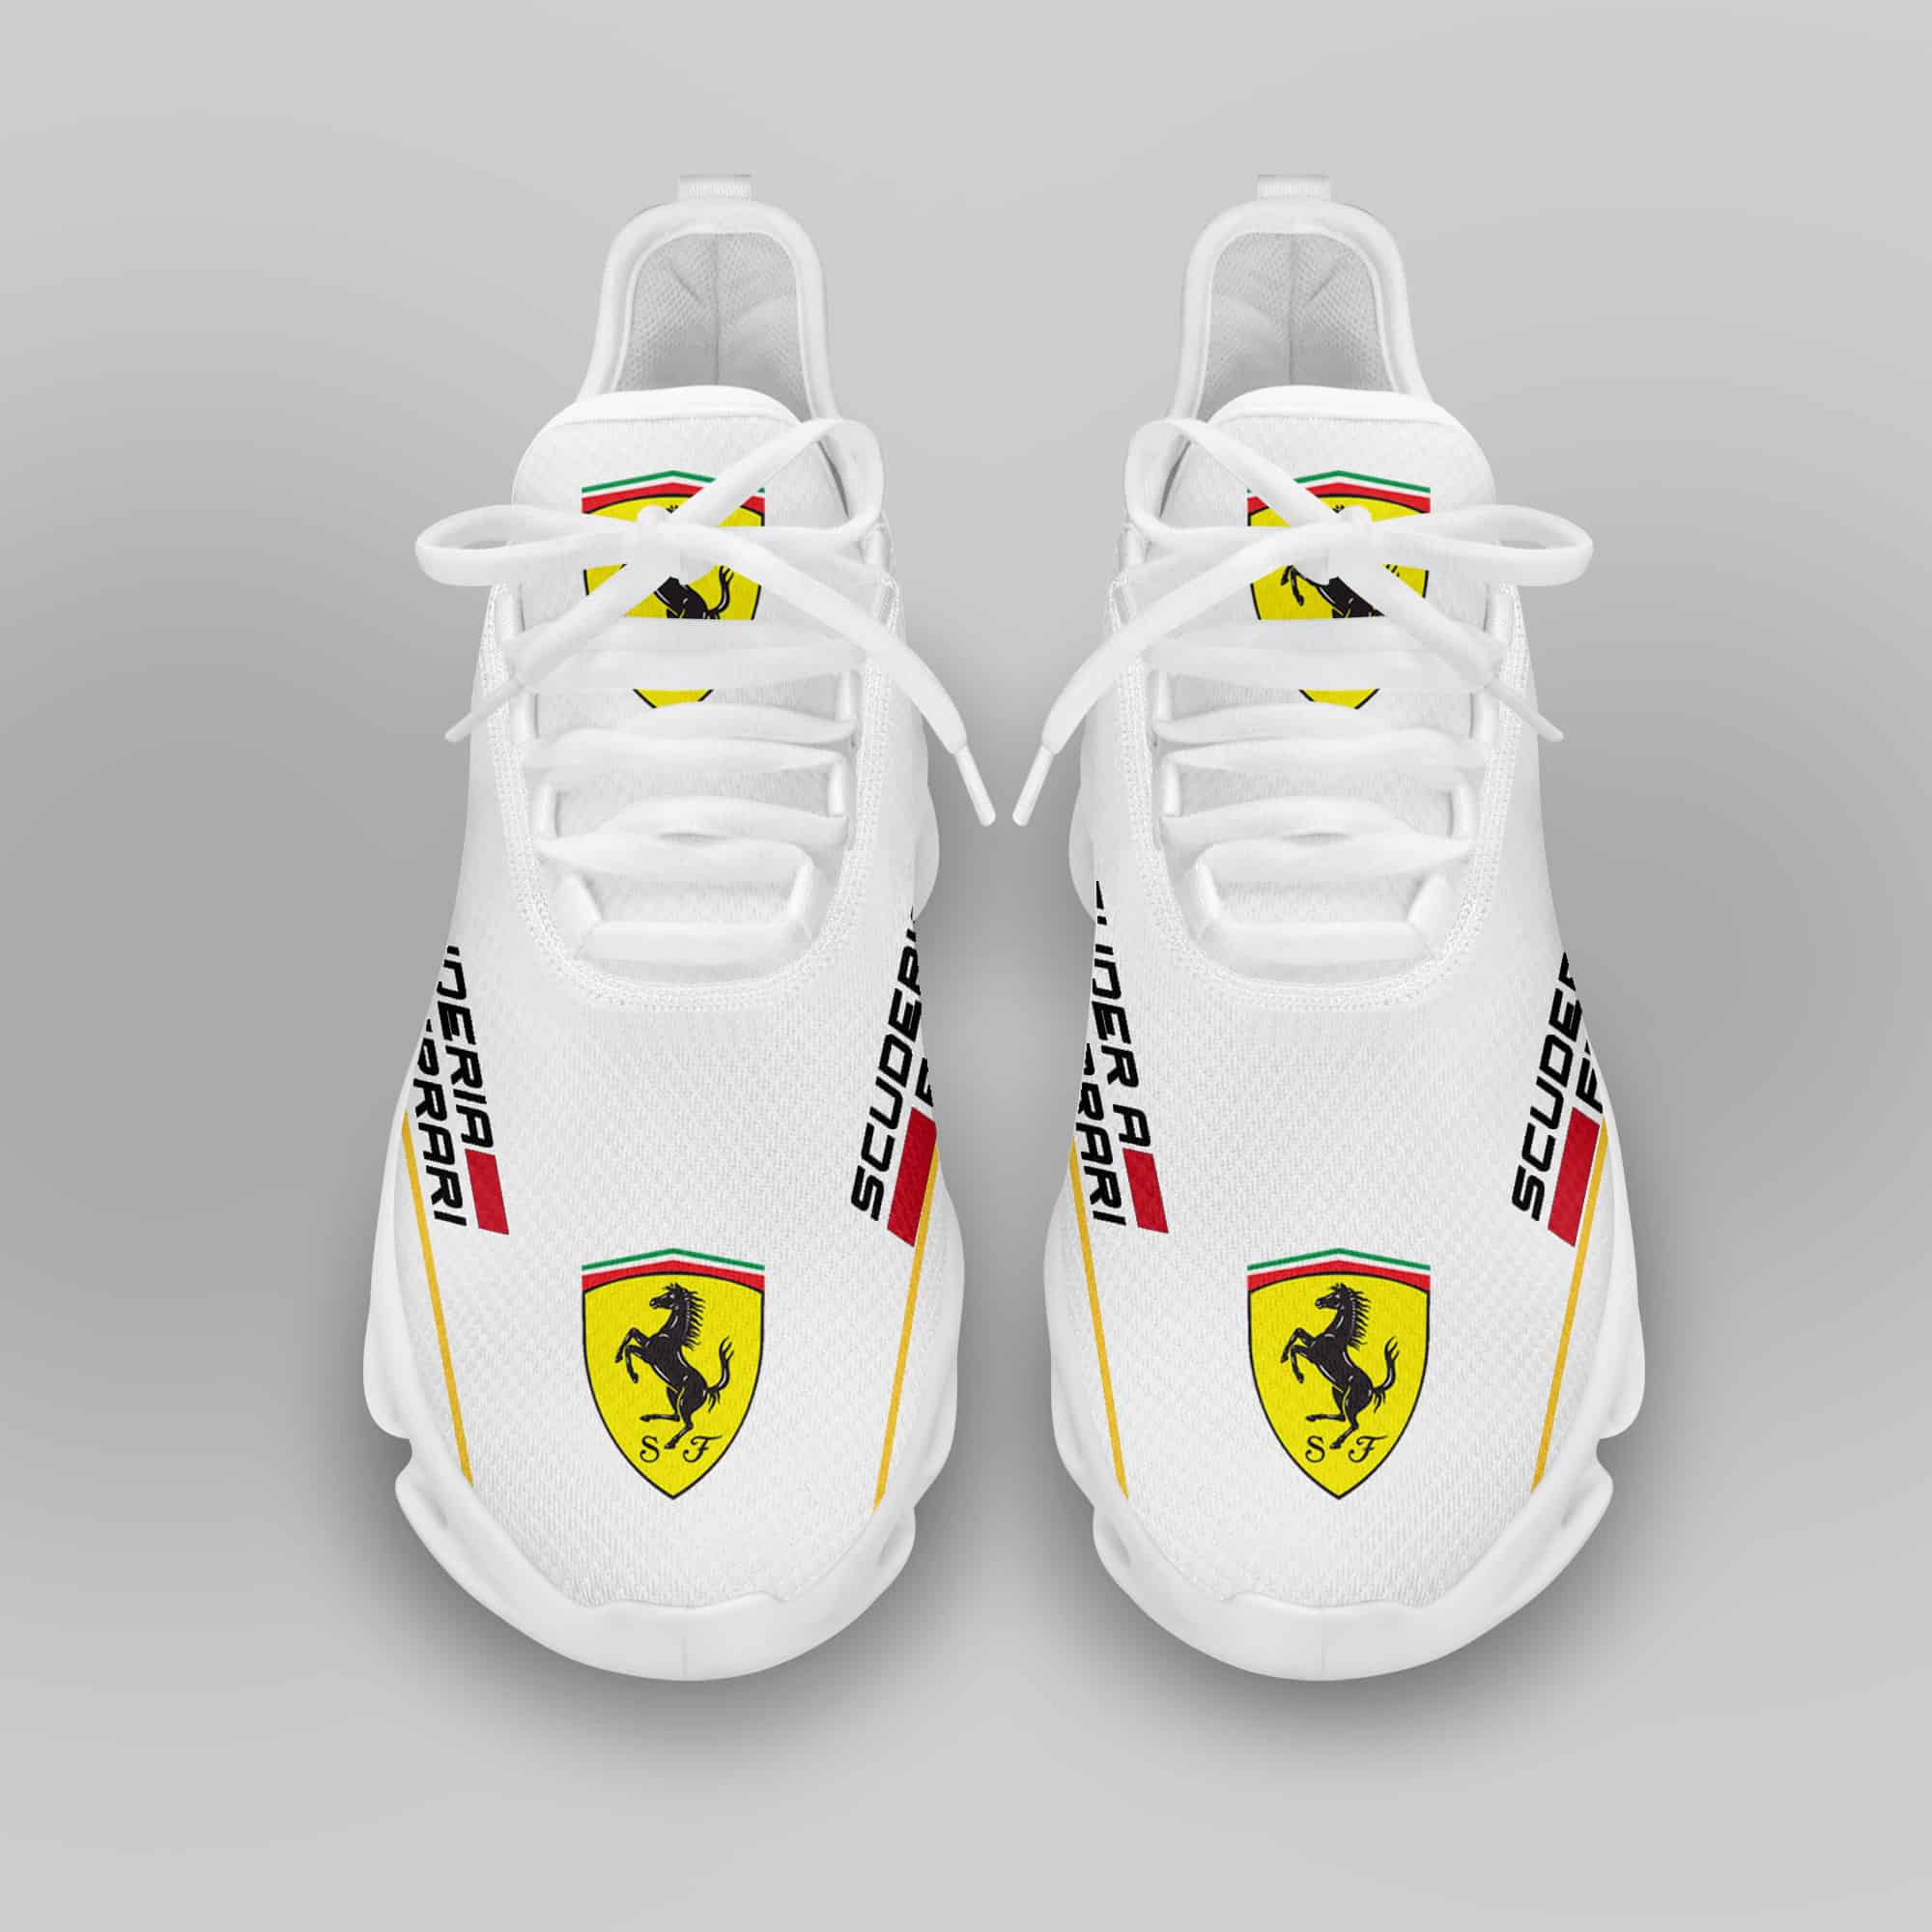 Ferrari Sneaker Running Shoes Max Soul Shoes Sneakers Ver 32 3